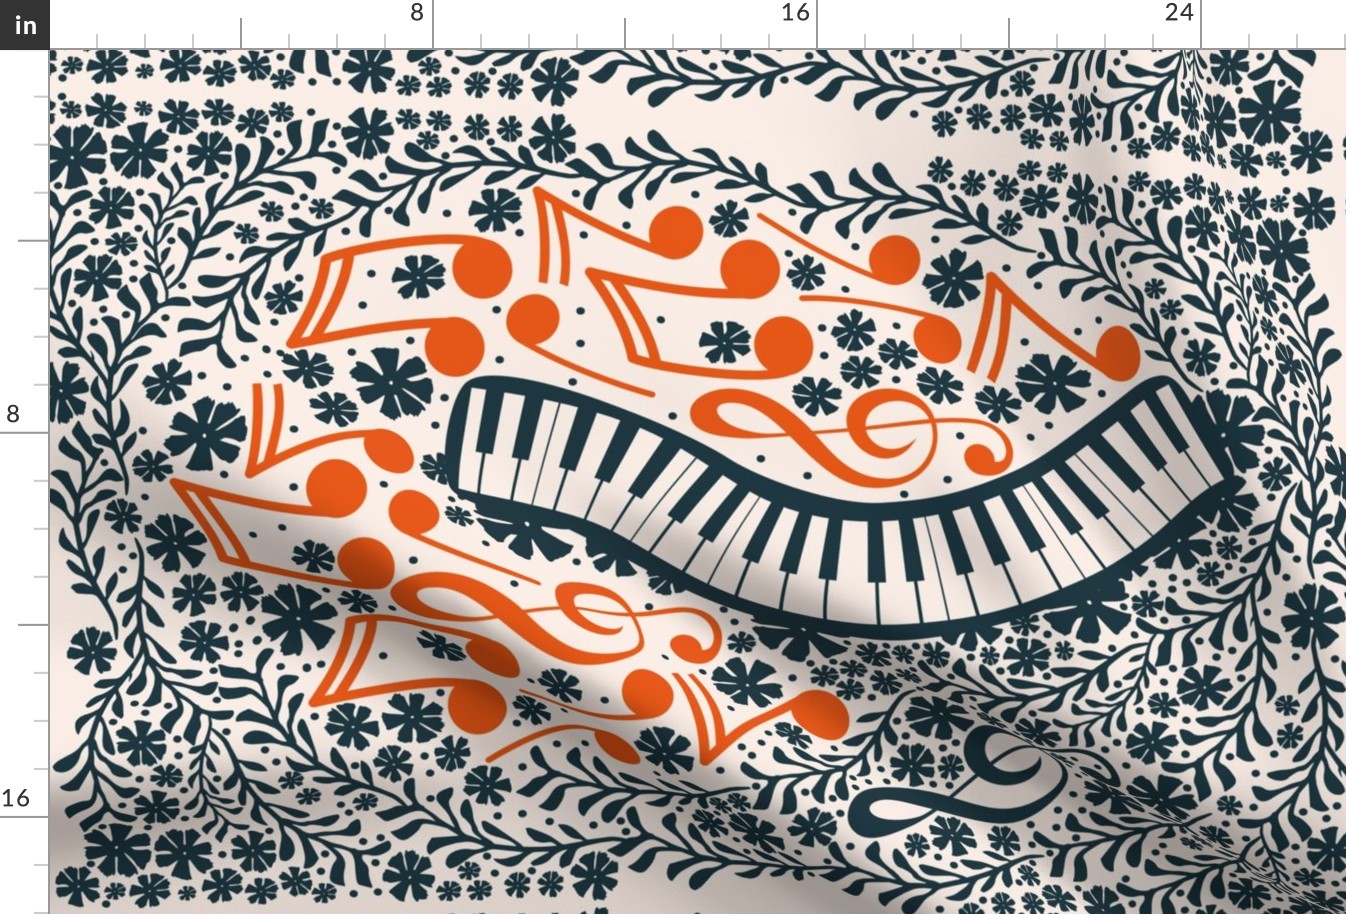 Piano Keyboard and Music Notes